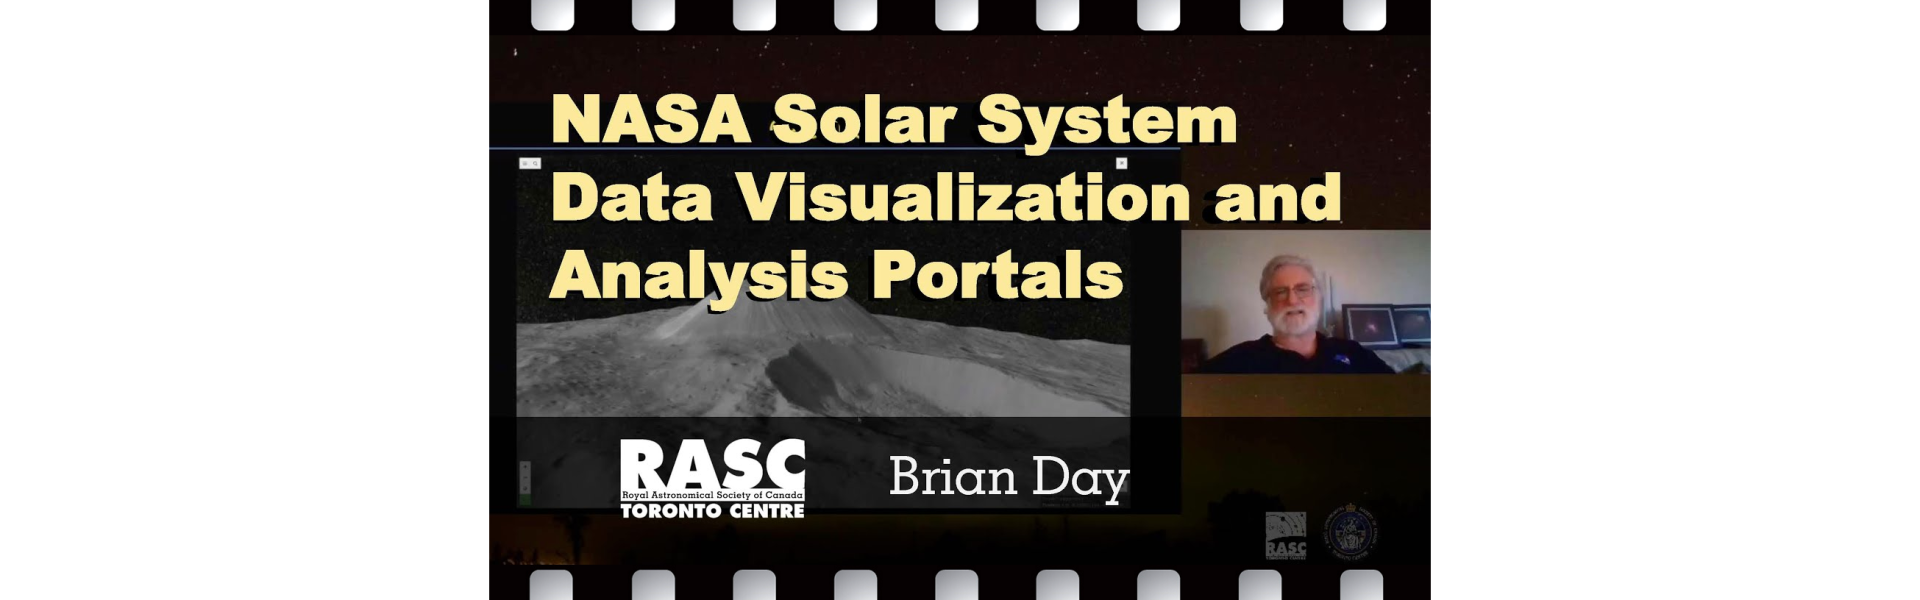 NASA Solar System Data Visualization and Analysis Portals